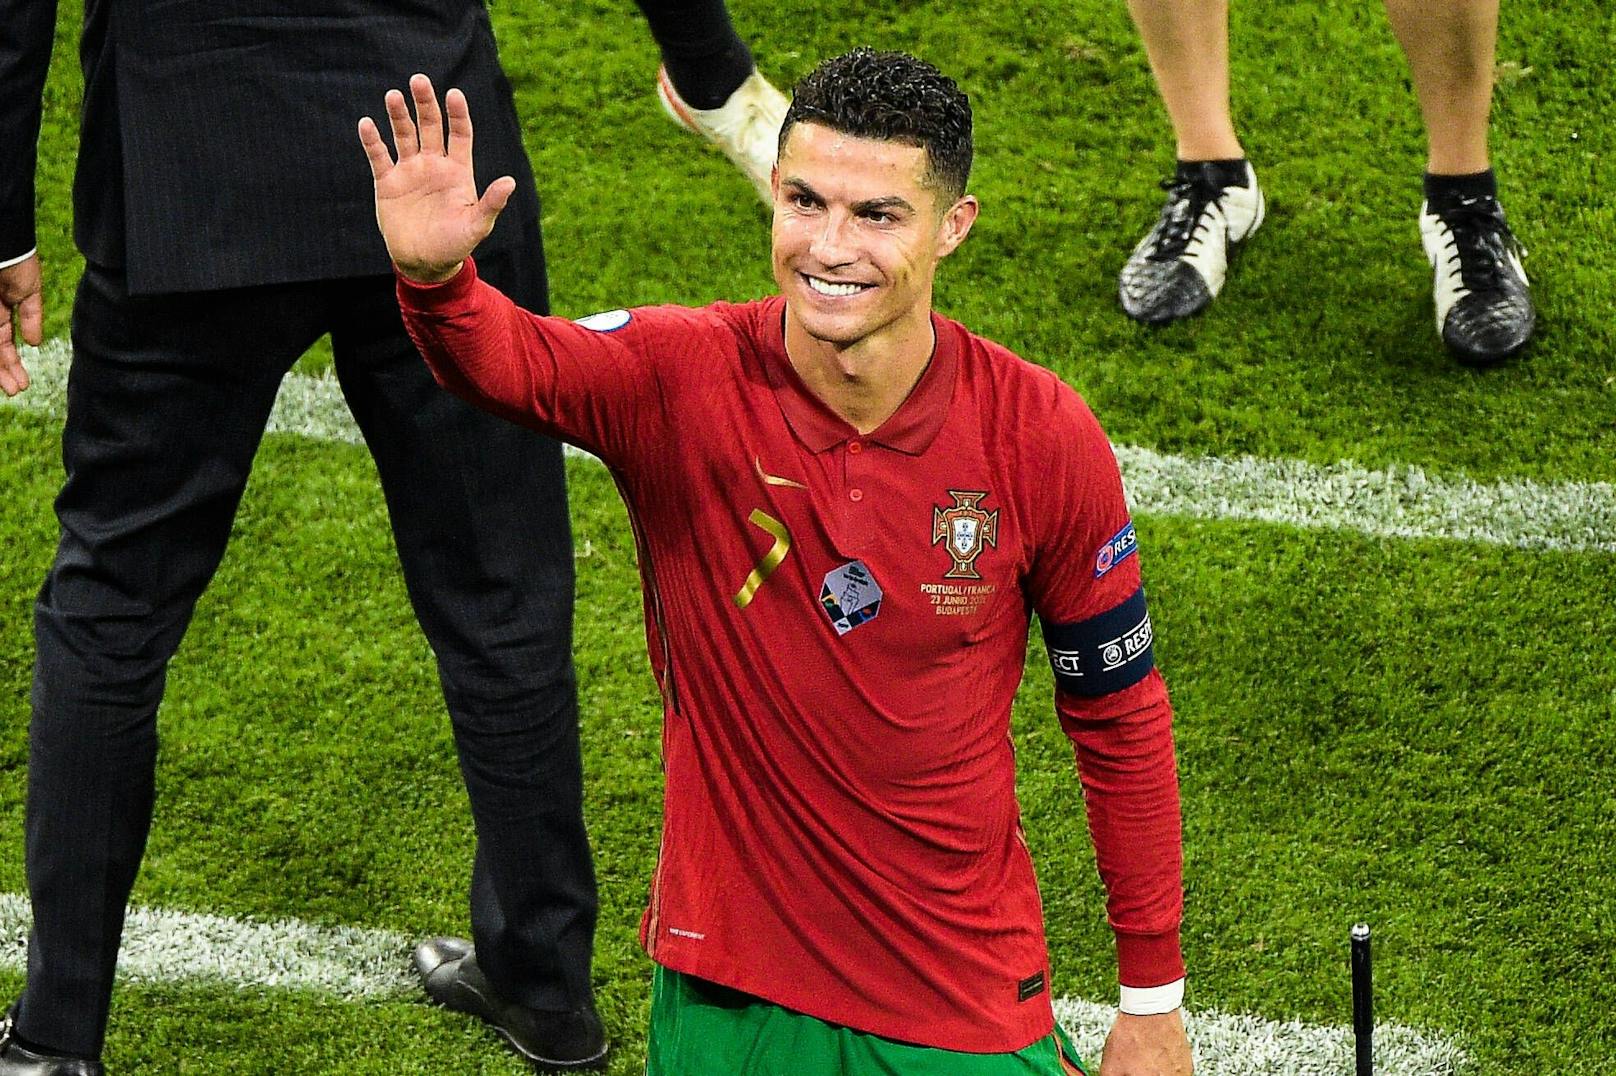 Kuriose Statistik: Darum ist Portugal der WM-Topfavorit